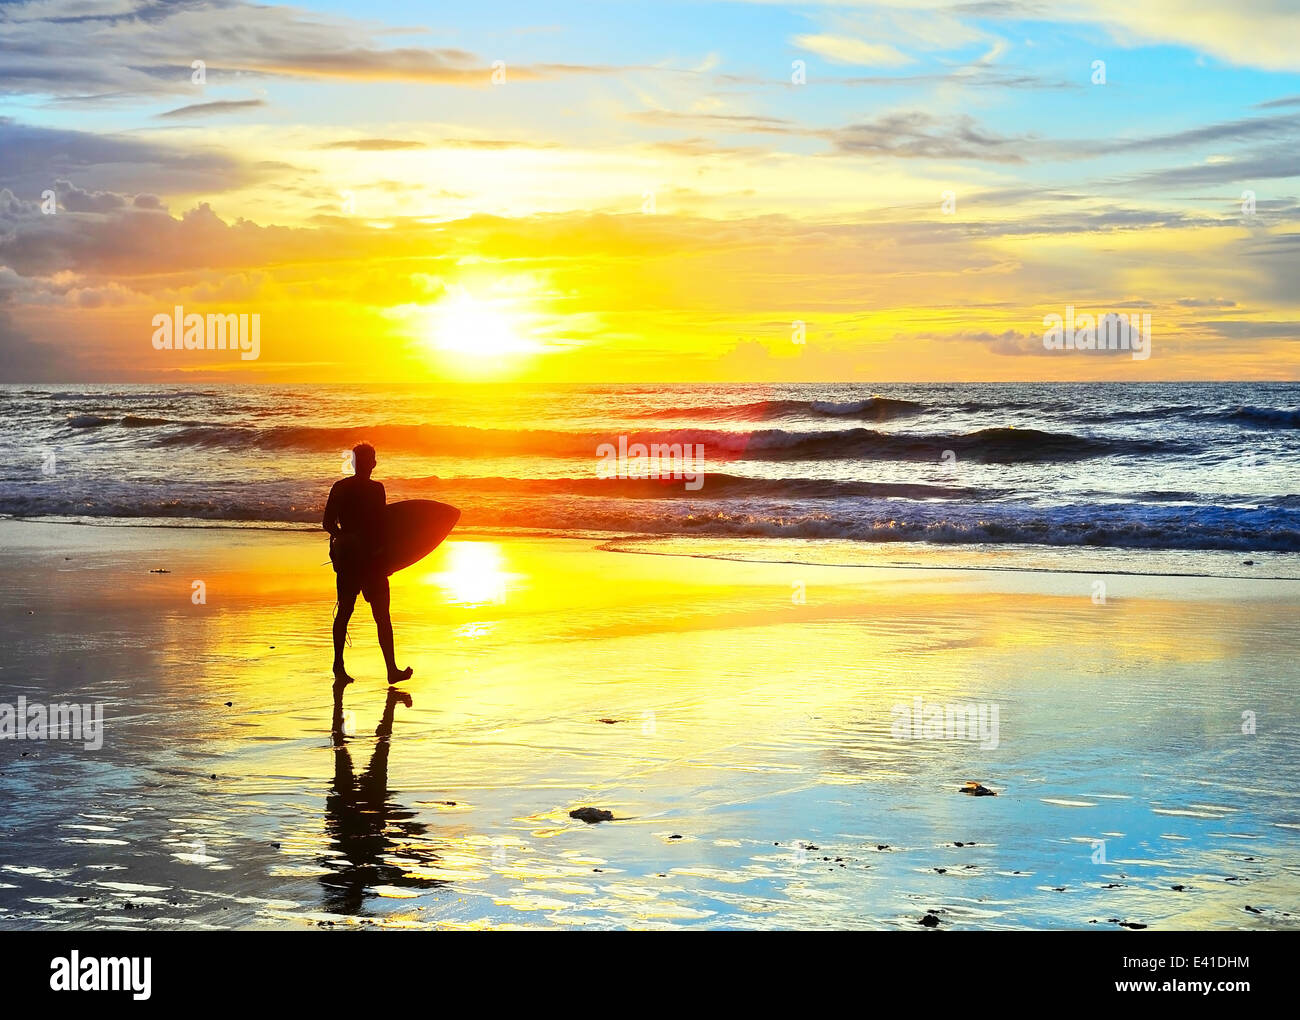 Surfer mit Surfbrett zu Fuß am Meer Strand bei Sonnenuntergang. Insel Bali, Indonesien Stockfoto